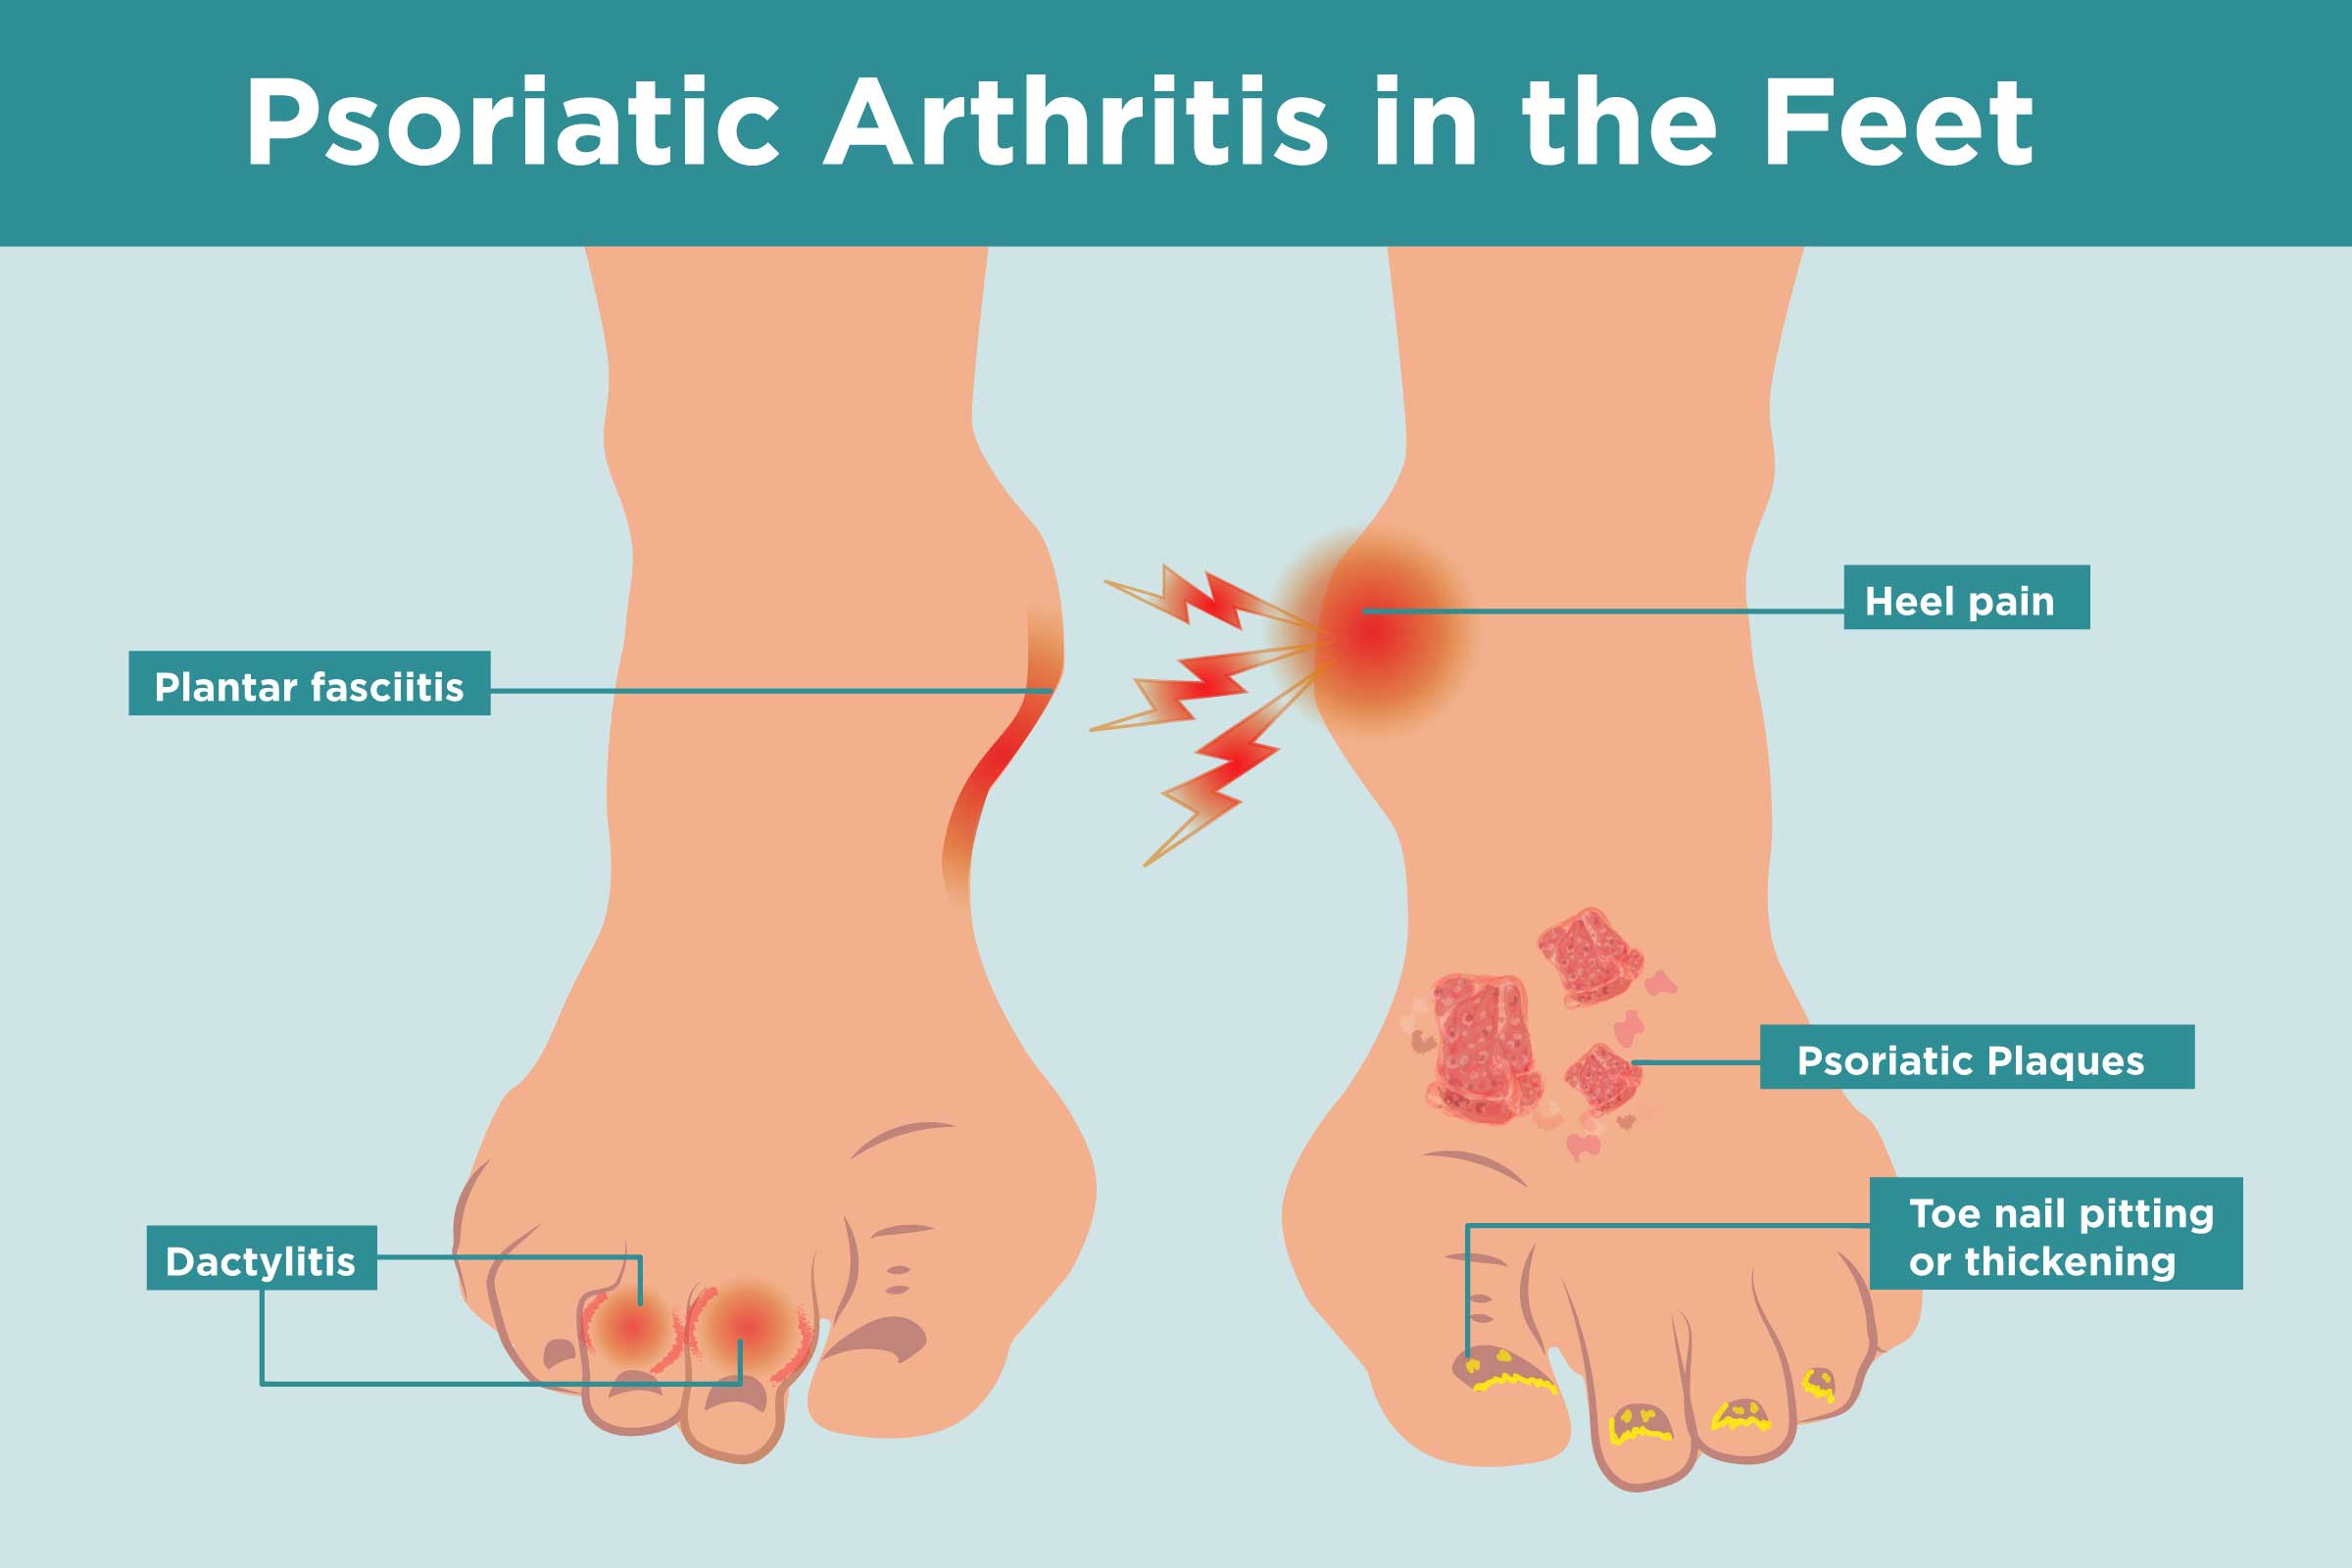 is psoriatic arthritis, a connective tissue disease